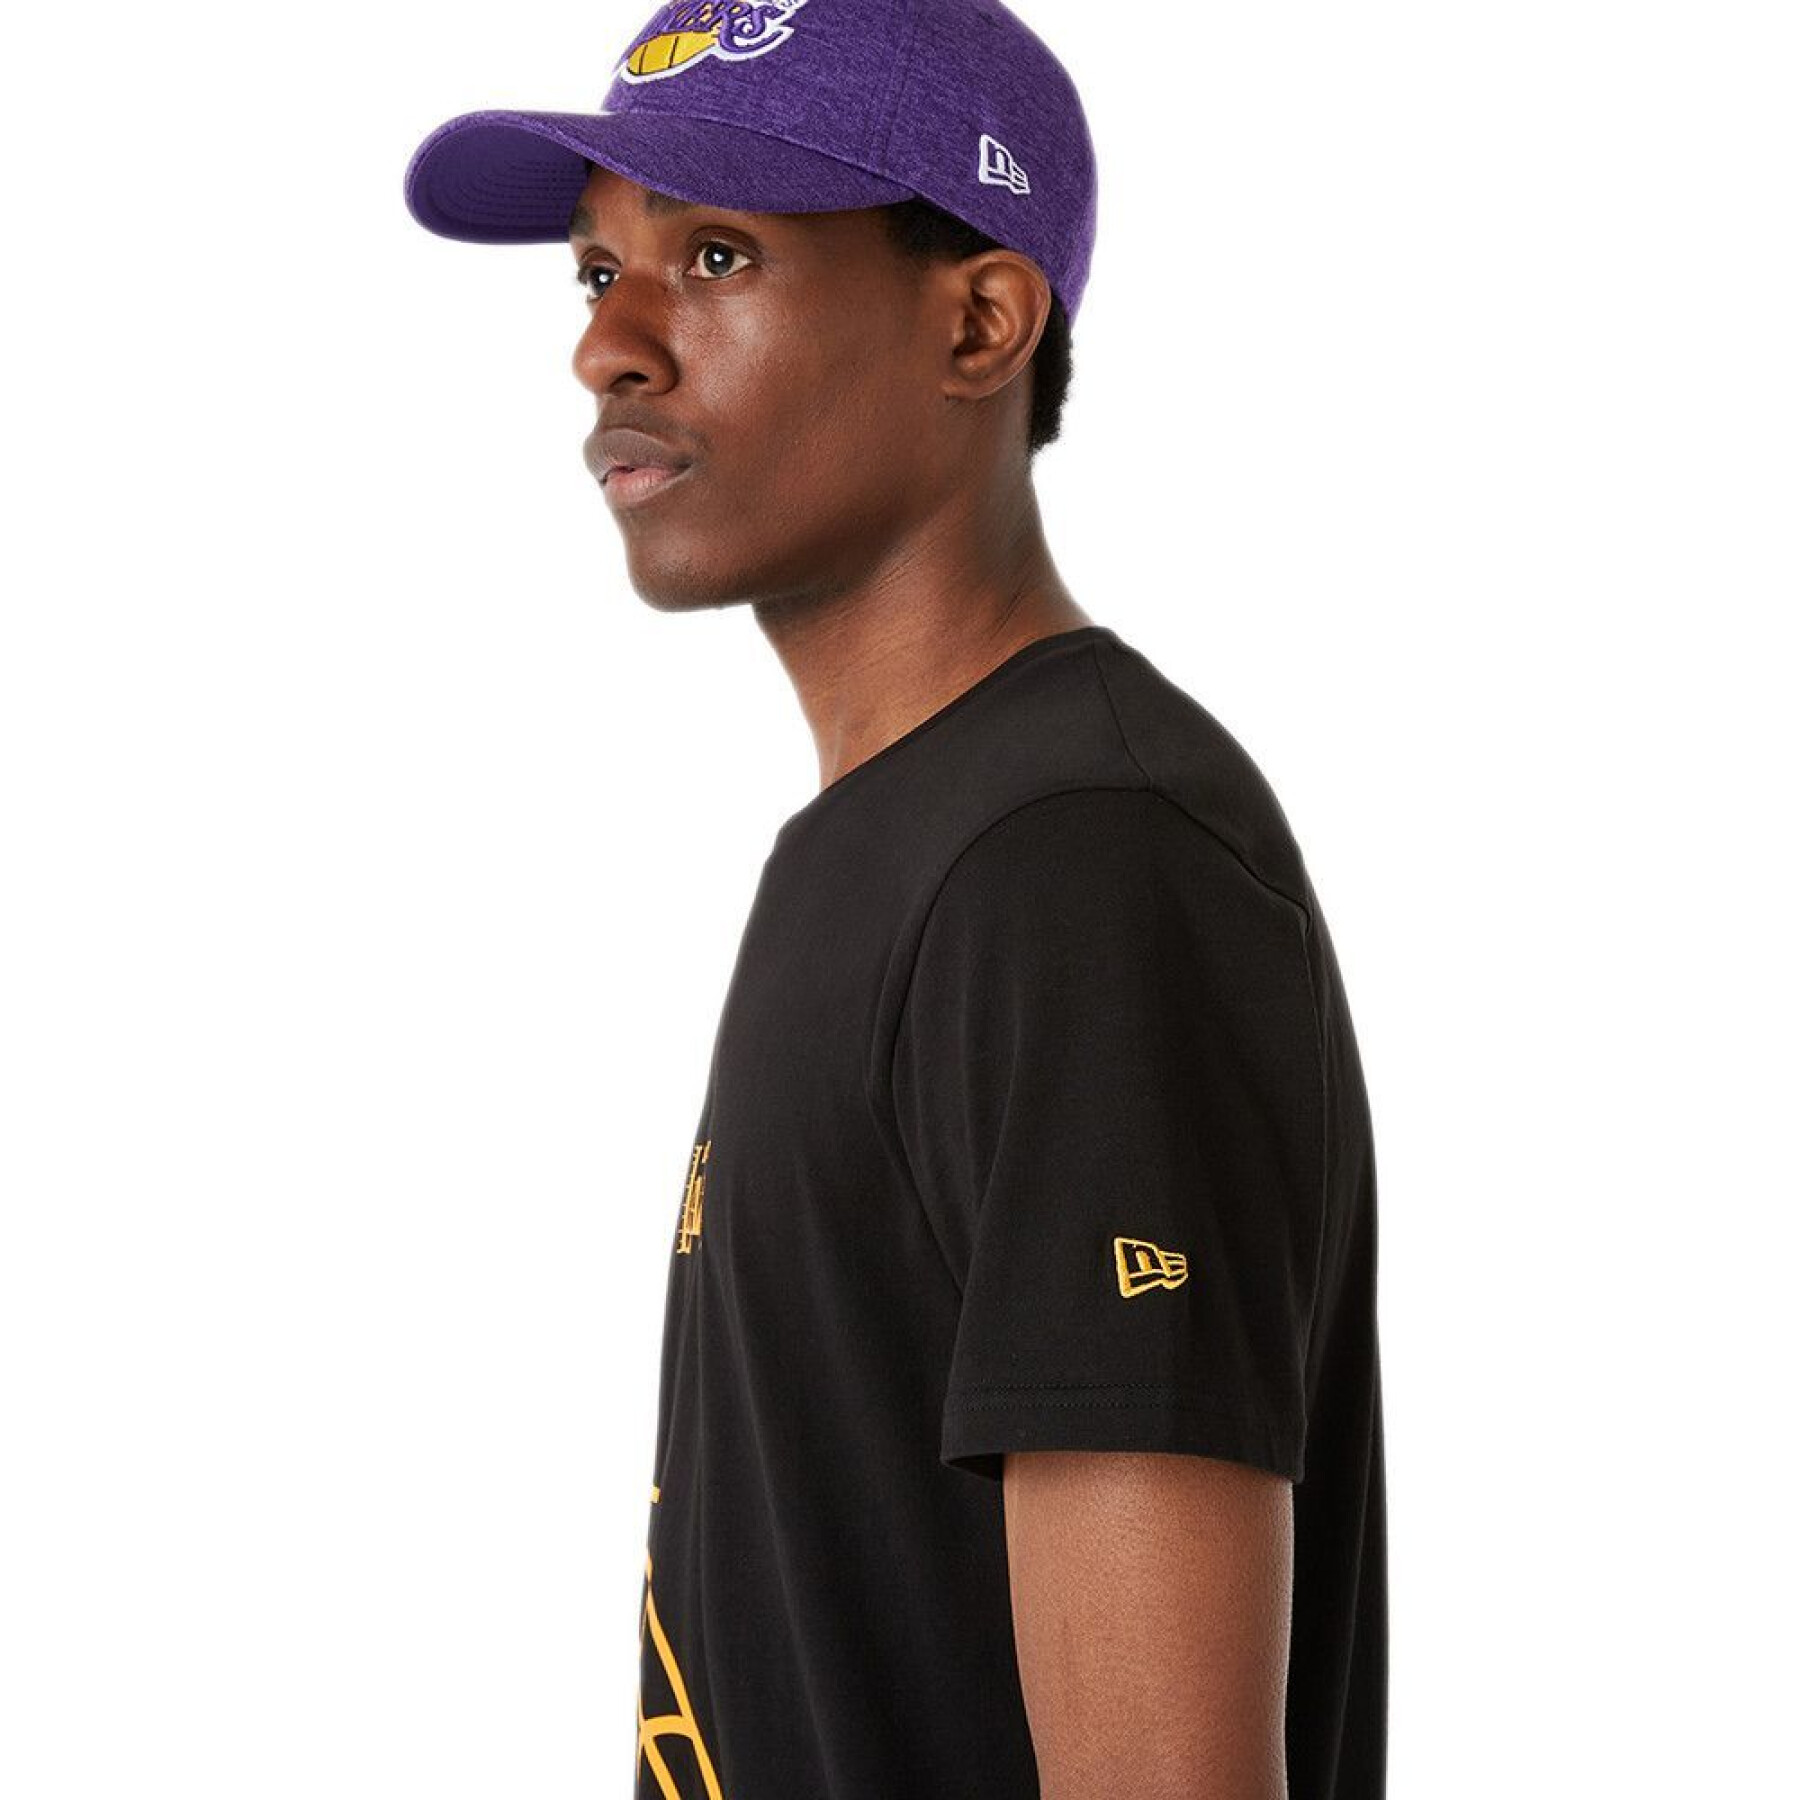 T-shirt Los Angeles Lakers Logo